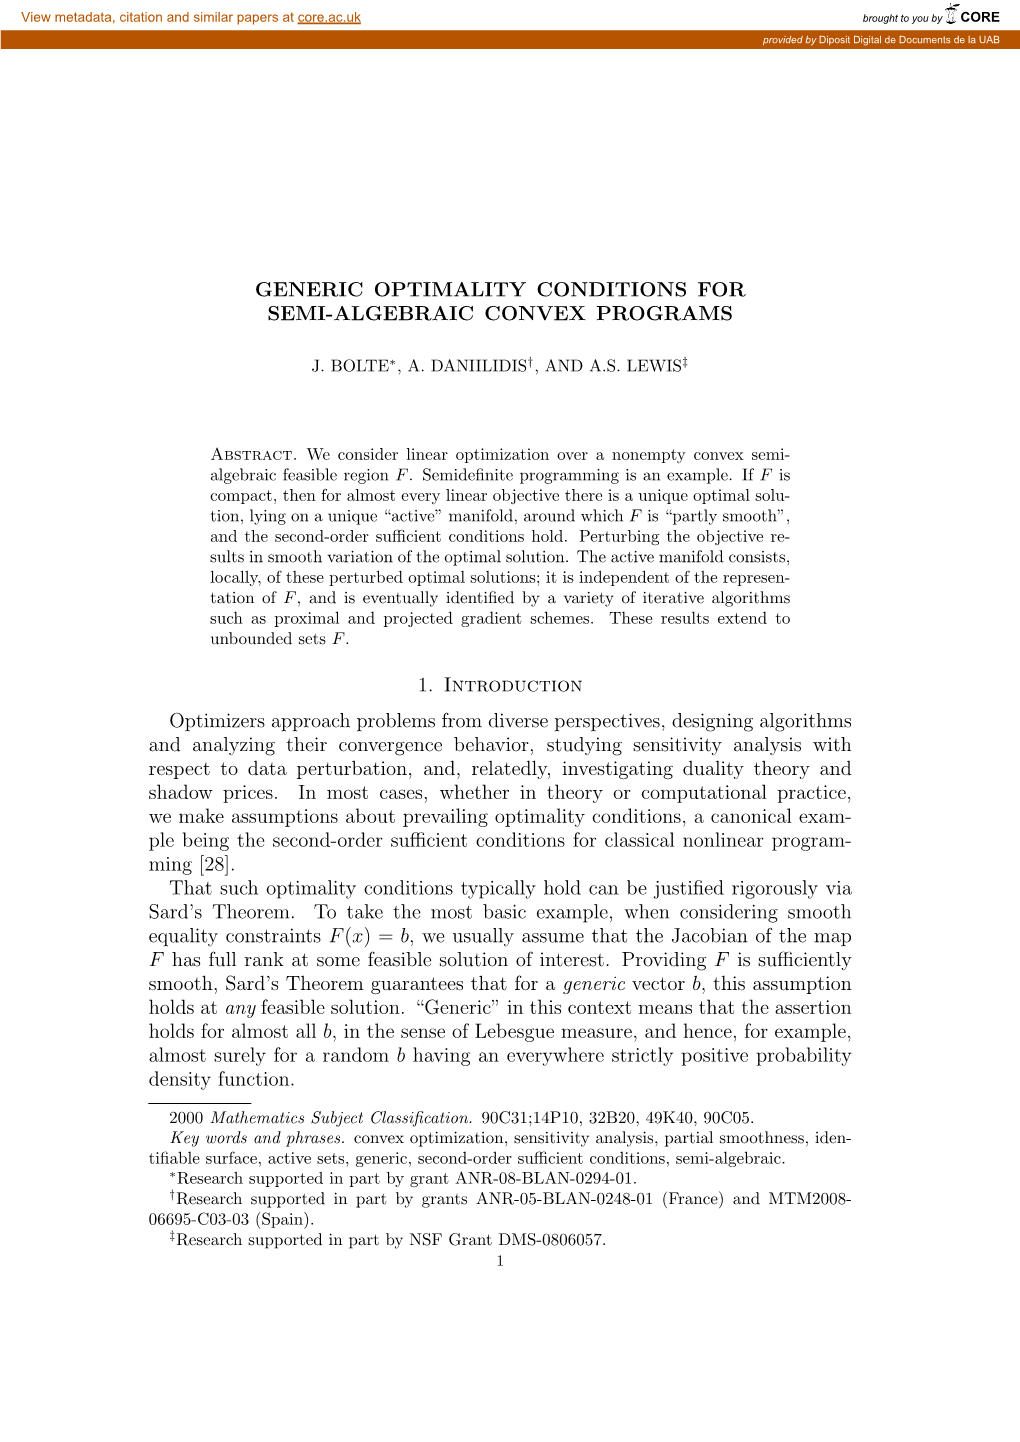 Generic Optimality Conditions for Semi-Algebraic Convex Programs